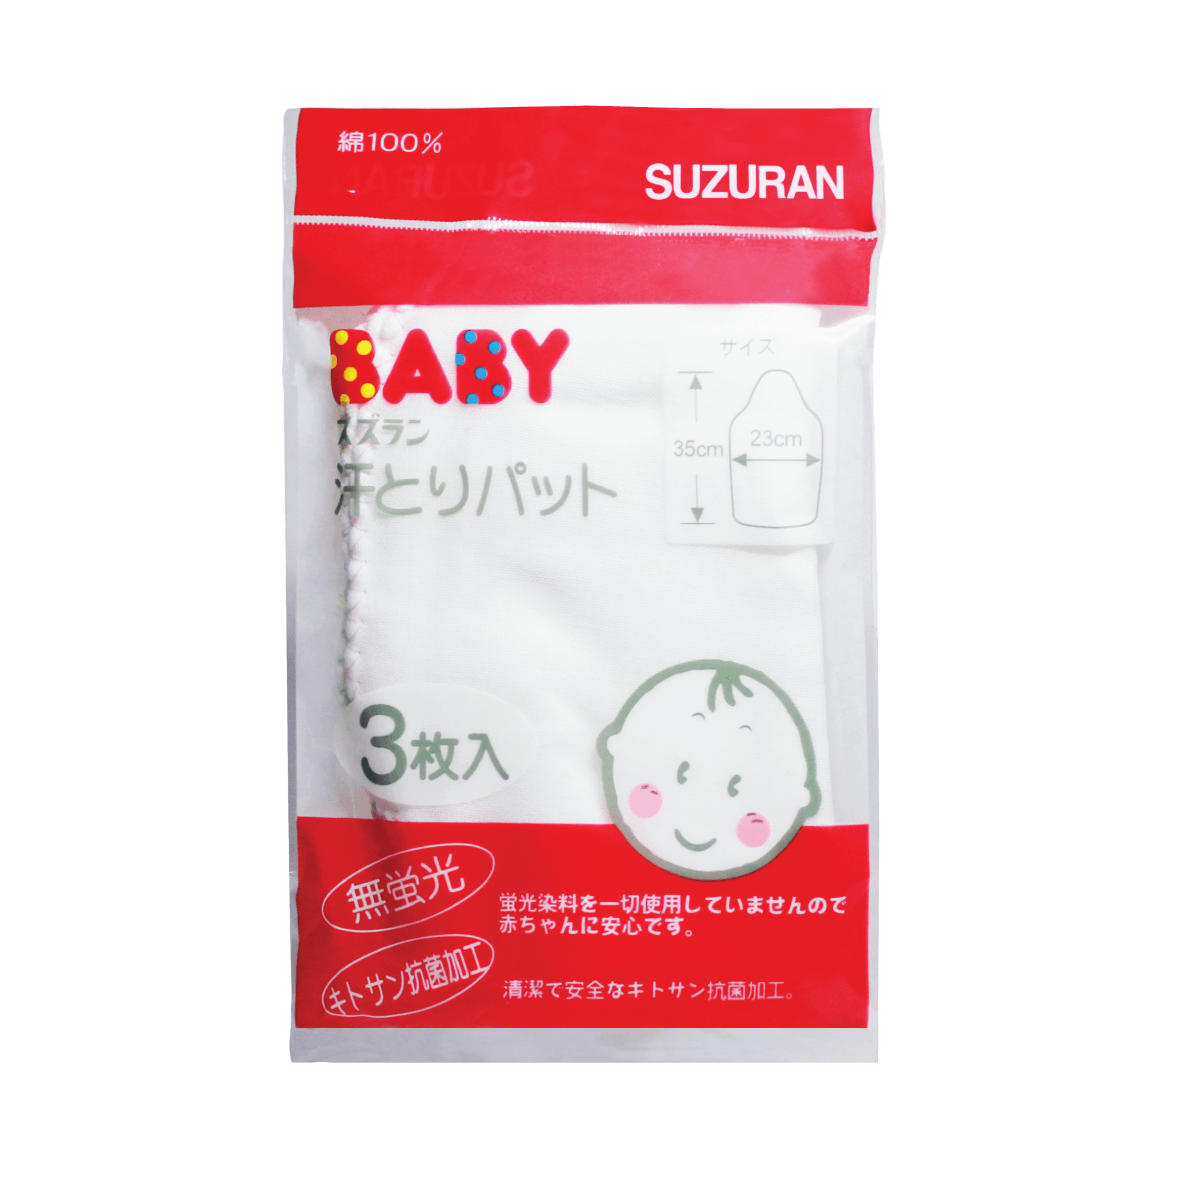 Suzuran Baby Gauze Sweat Pad 3pcs